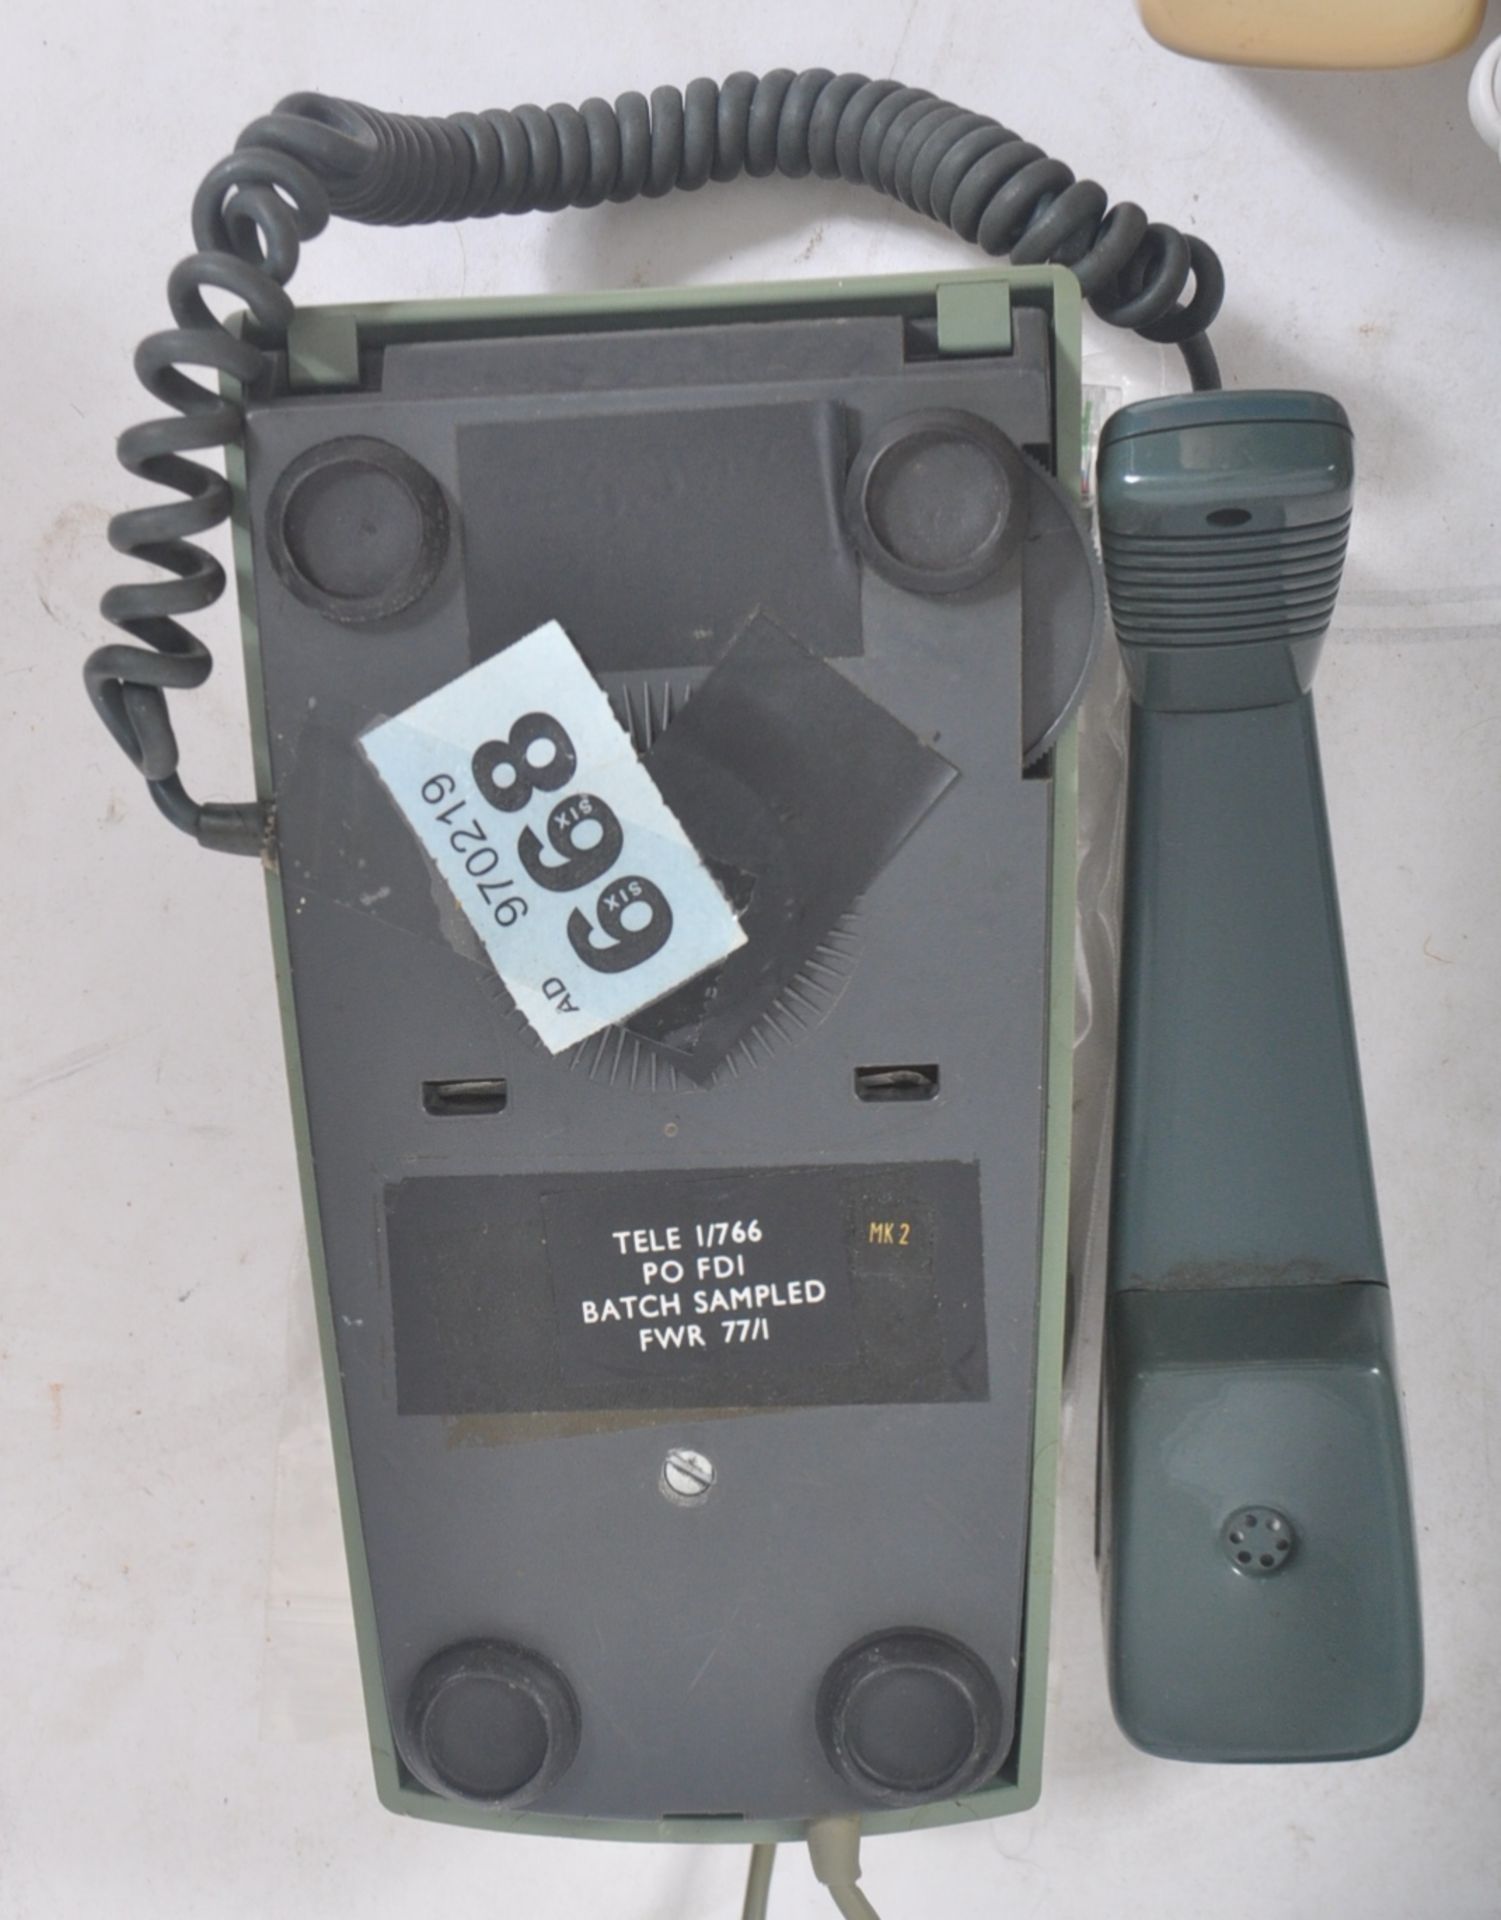 COLLECTION OF NINE VINTAGE 1970S GPO TRIMBONE TELEPHONES - Image 7 of 9